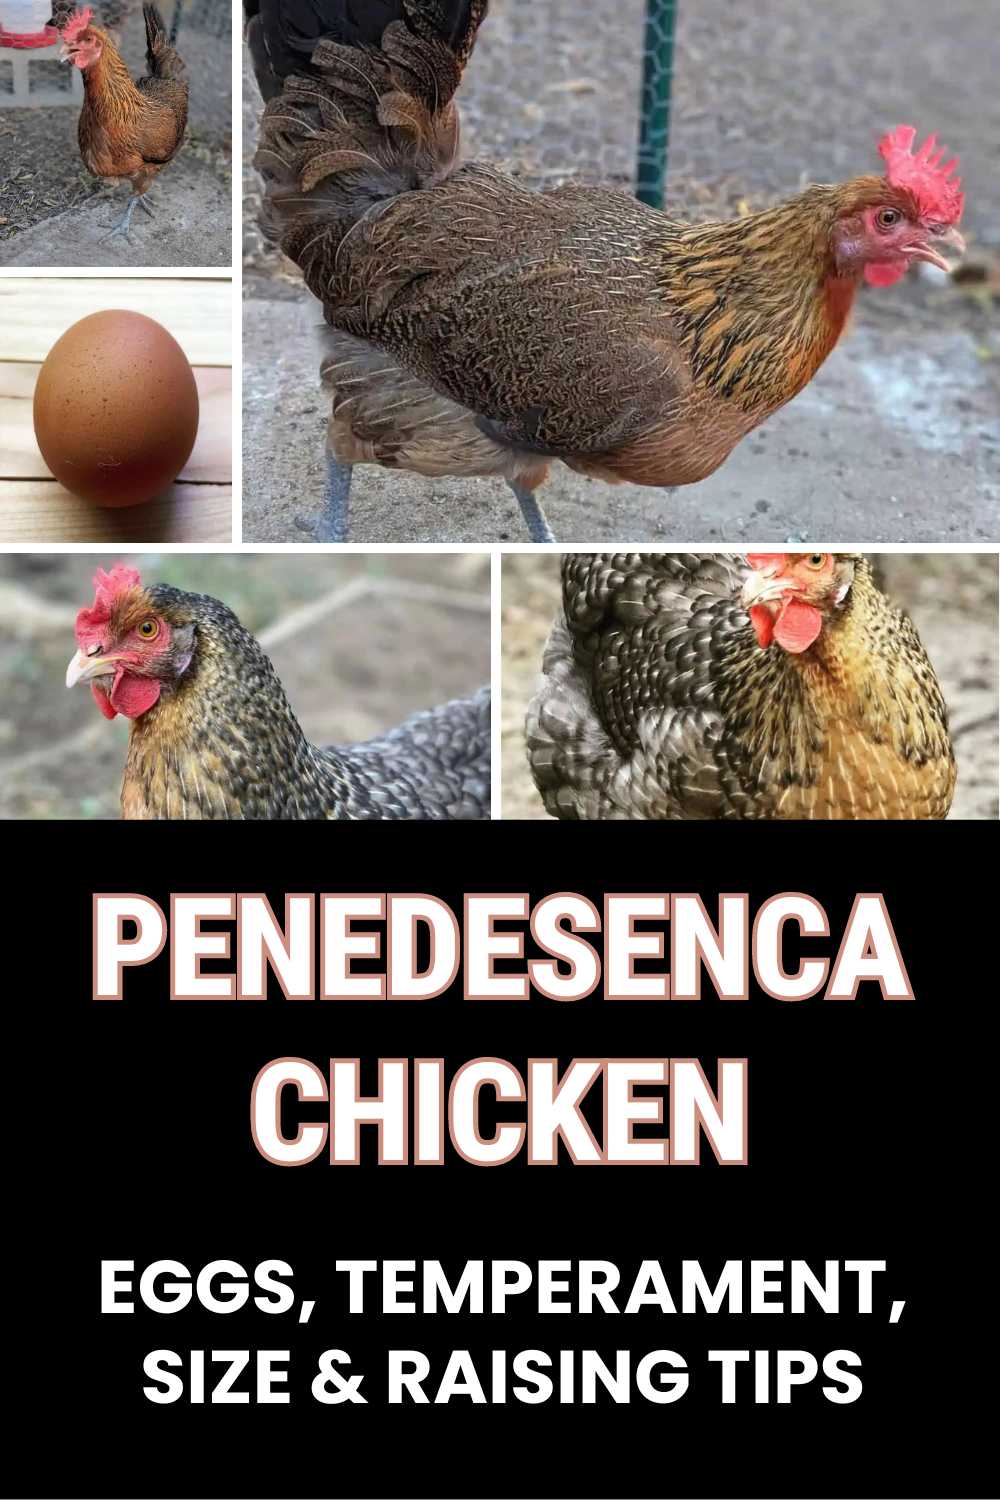 Penedesenca Chicken guide